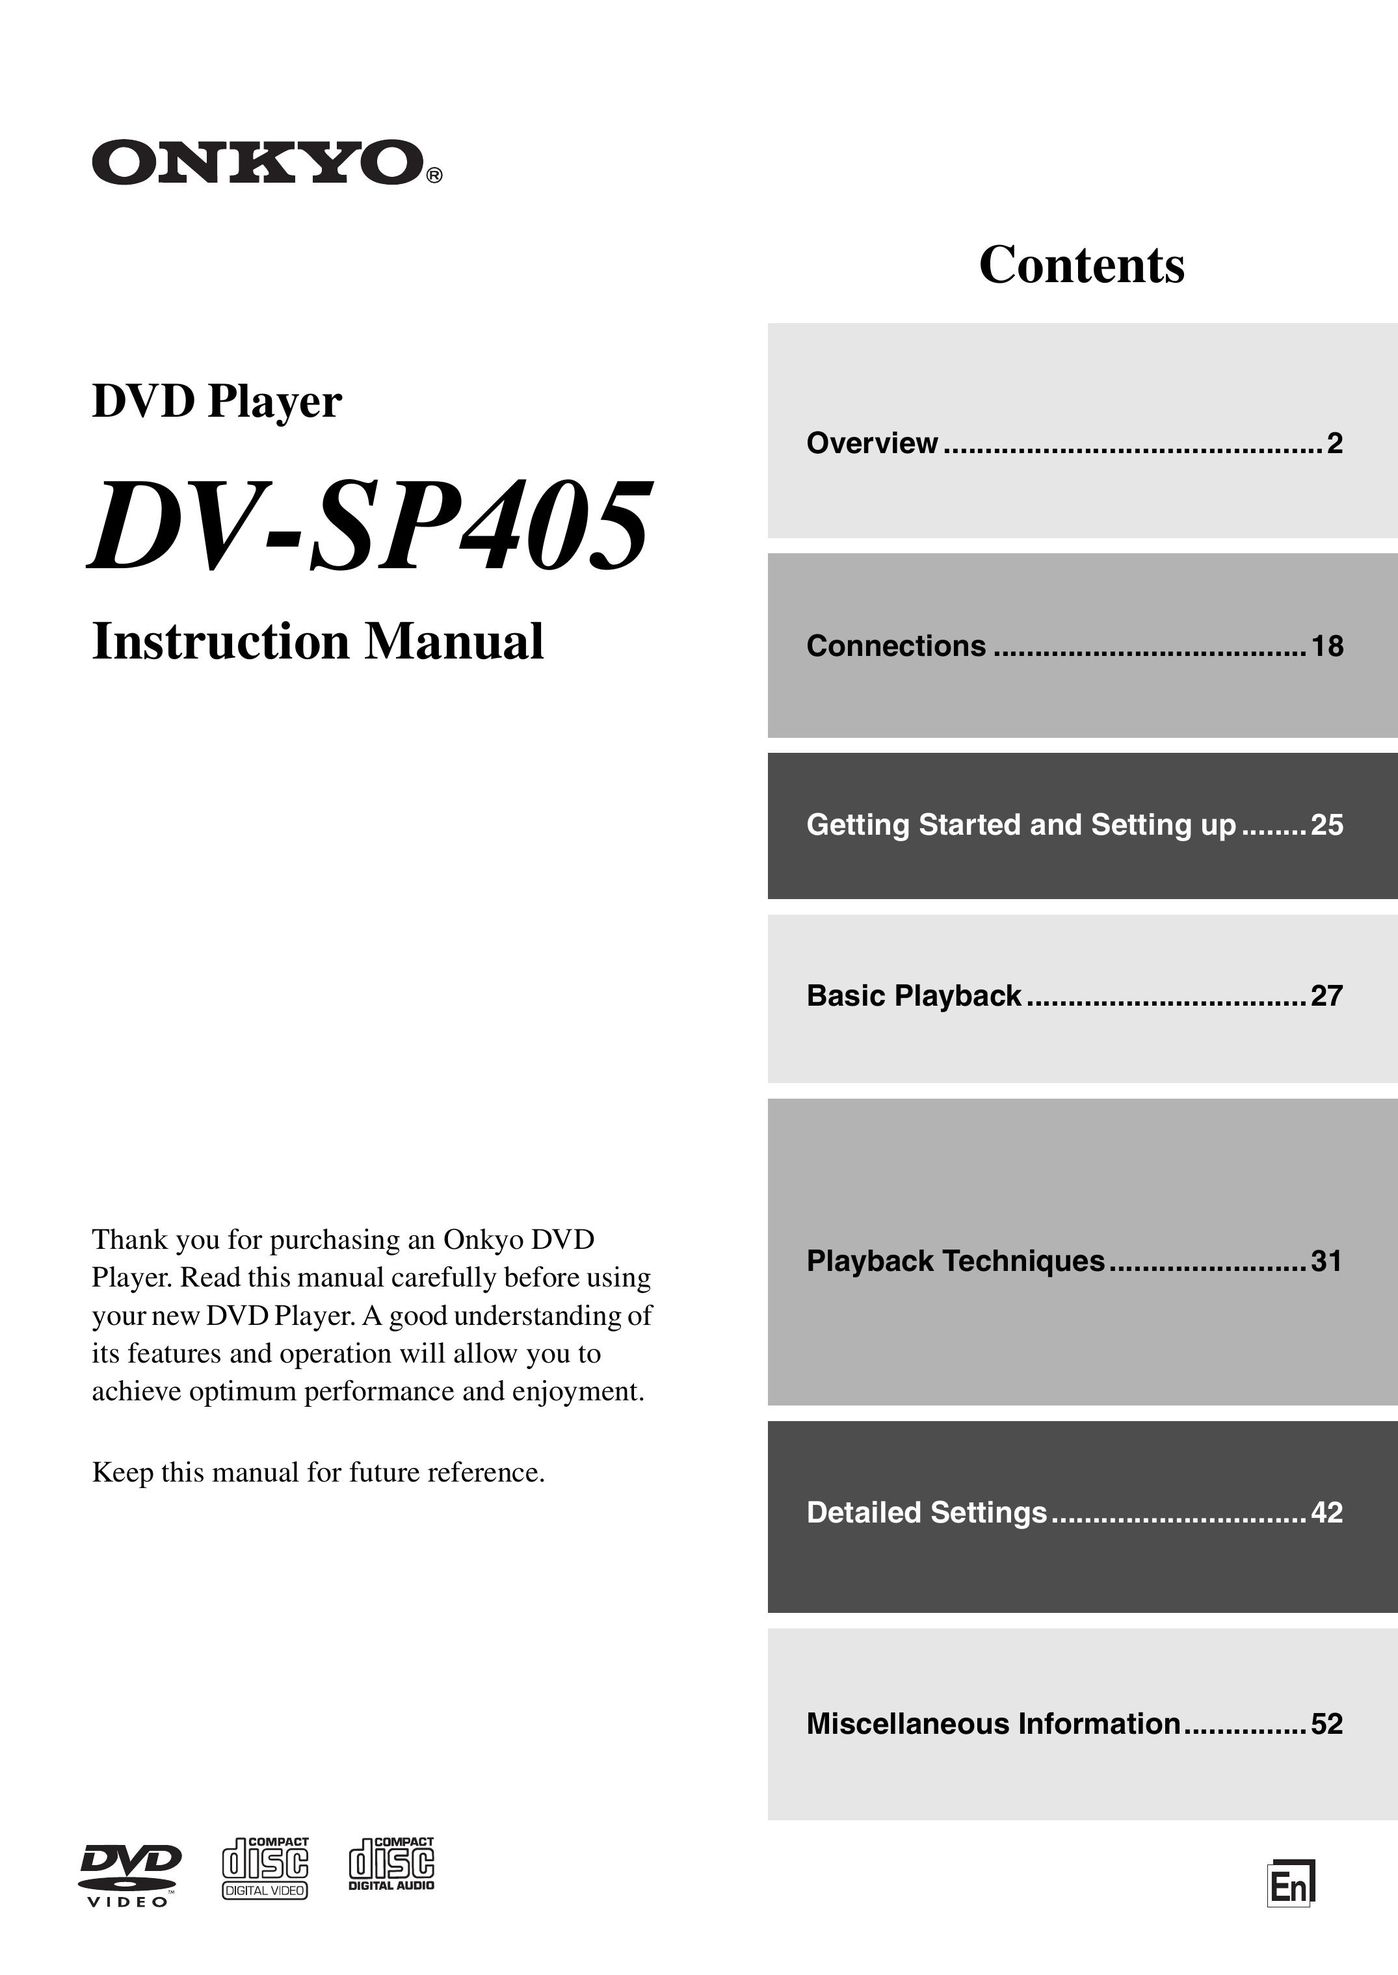 Onkyo DV-SP405 DVD Player User Manual